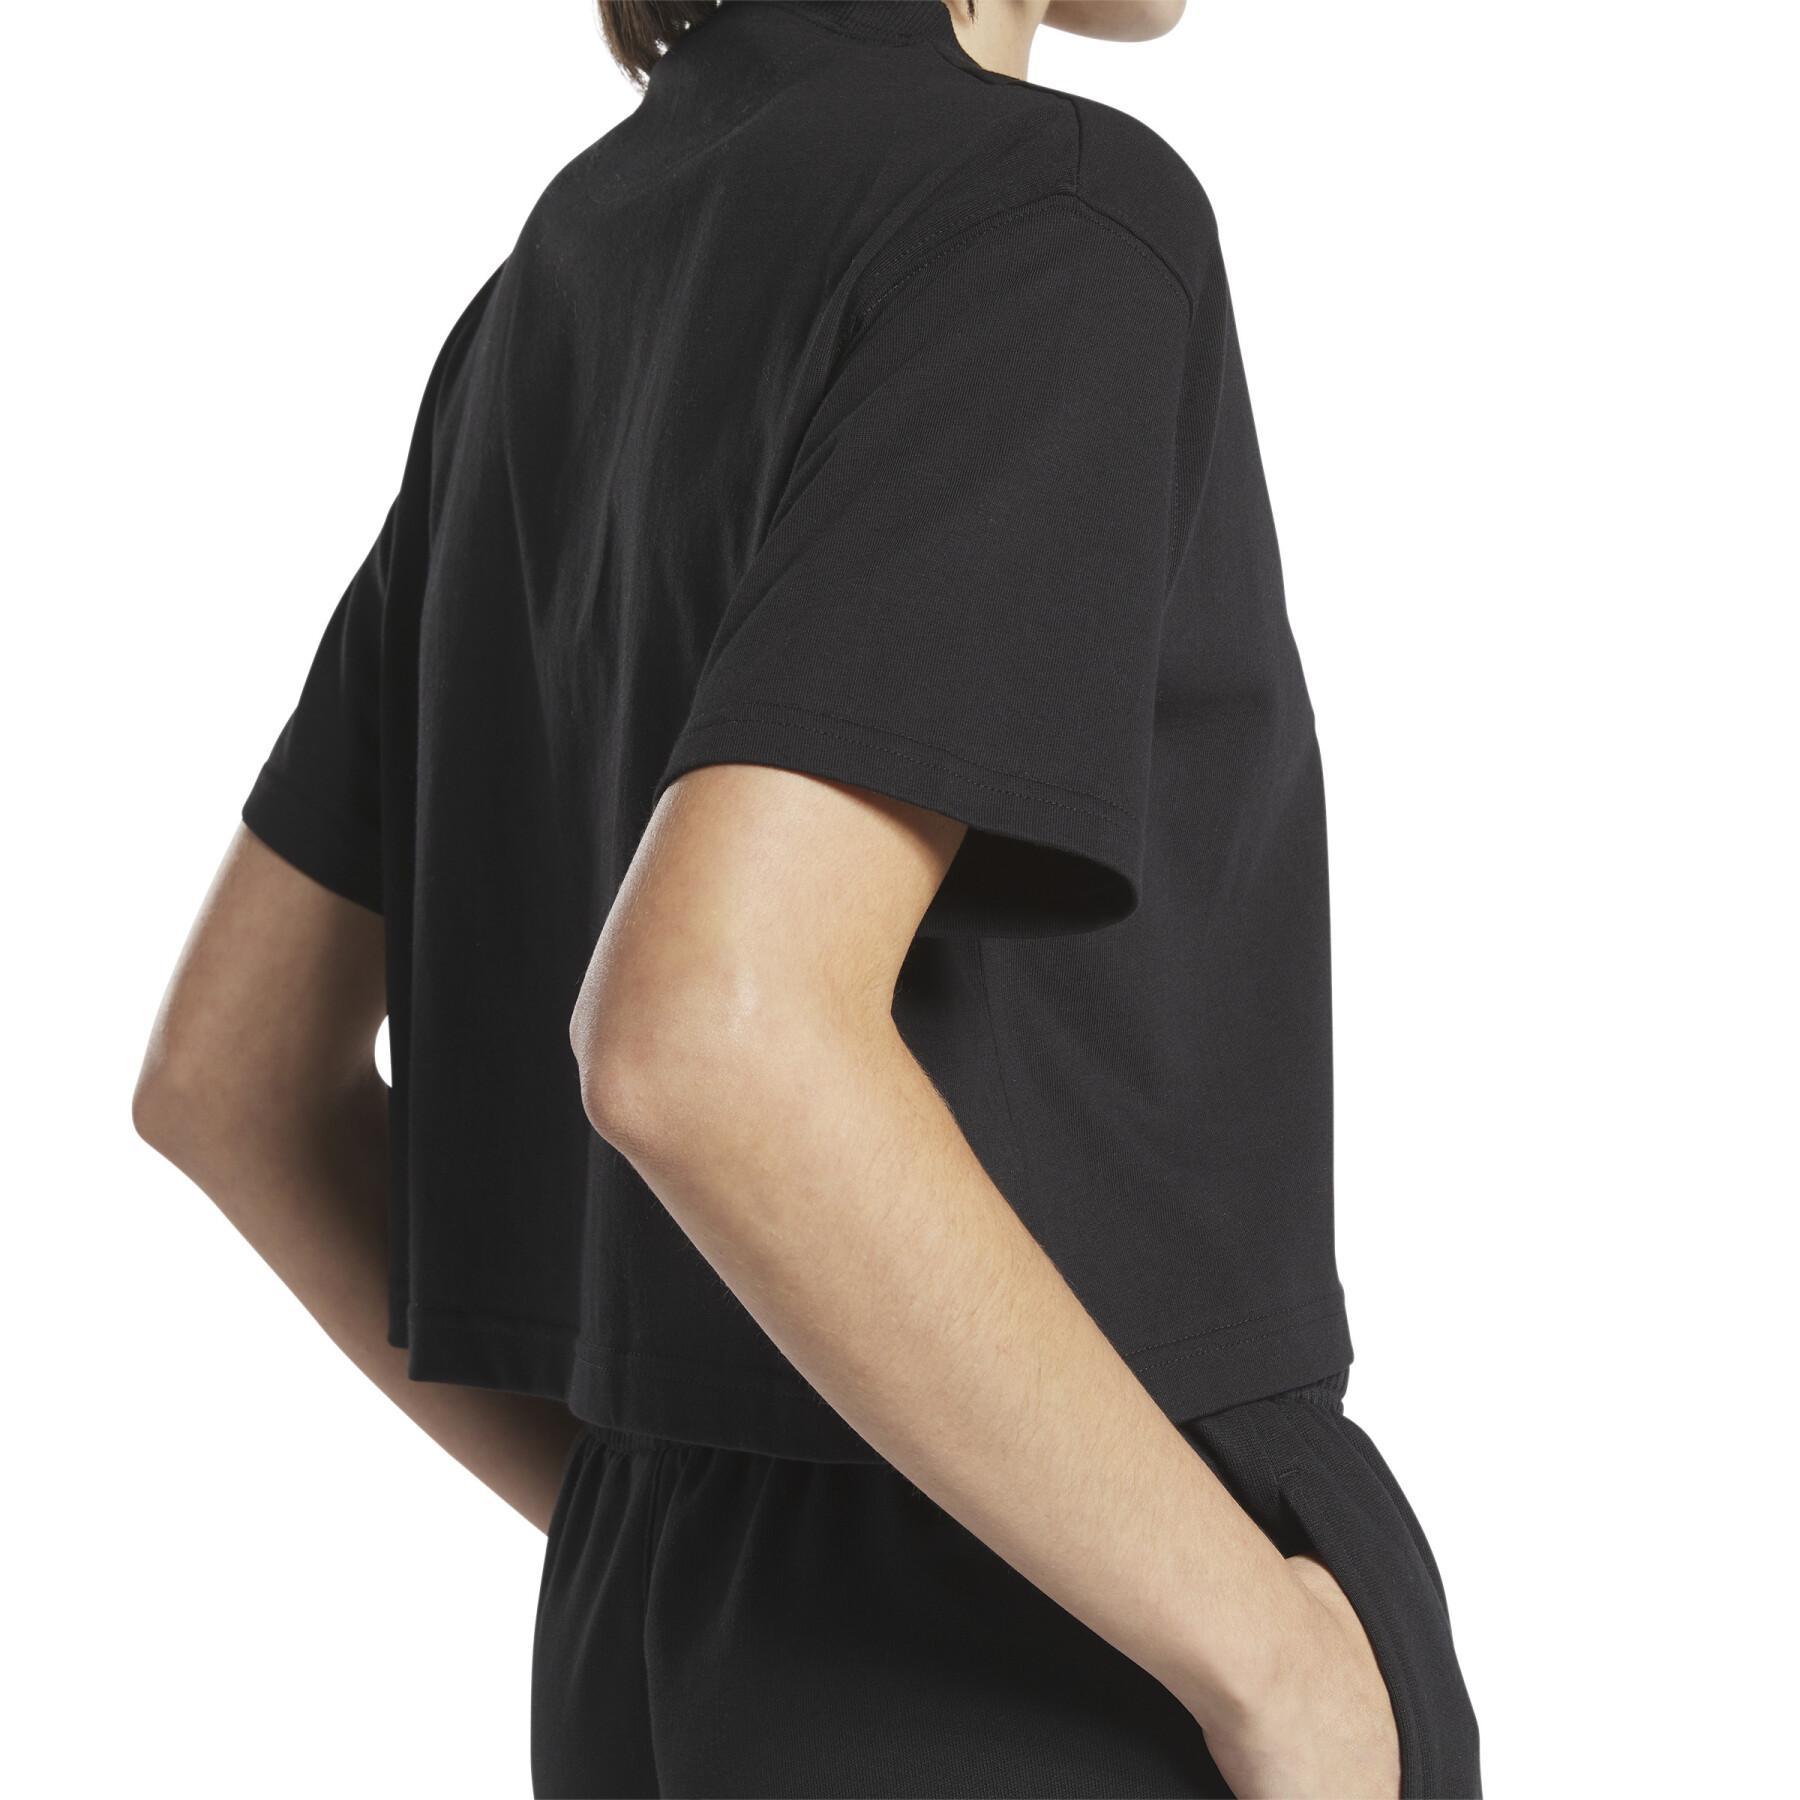 Women's crop top T-shirt Reebok Classics Big Logo